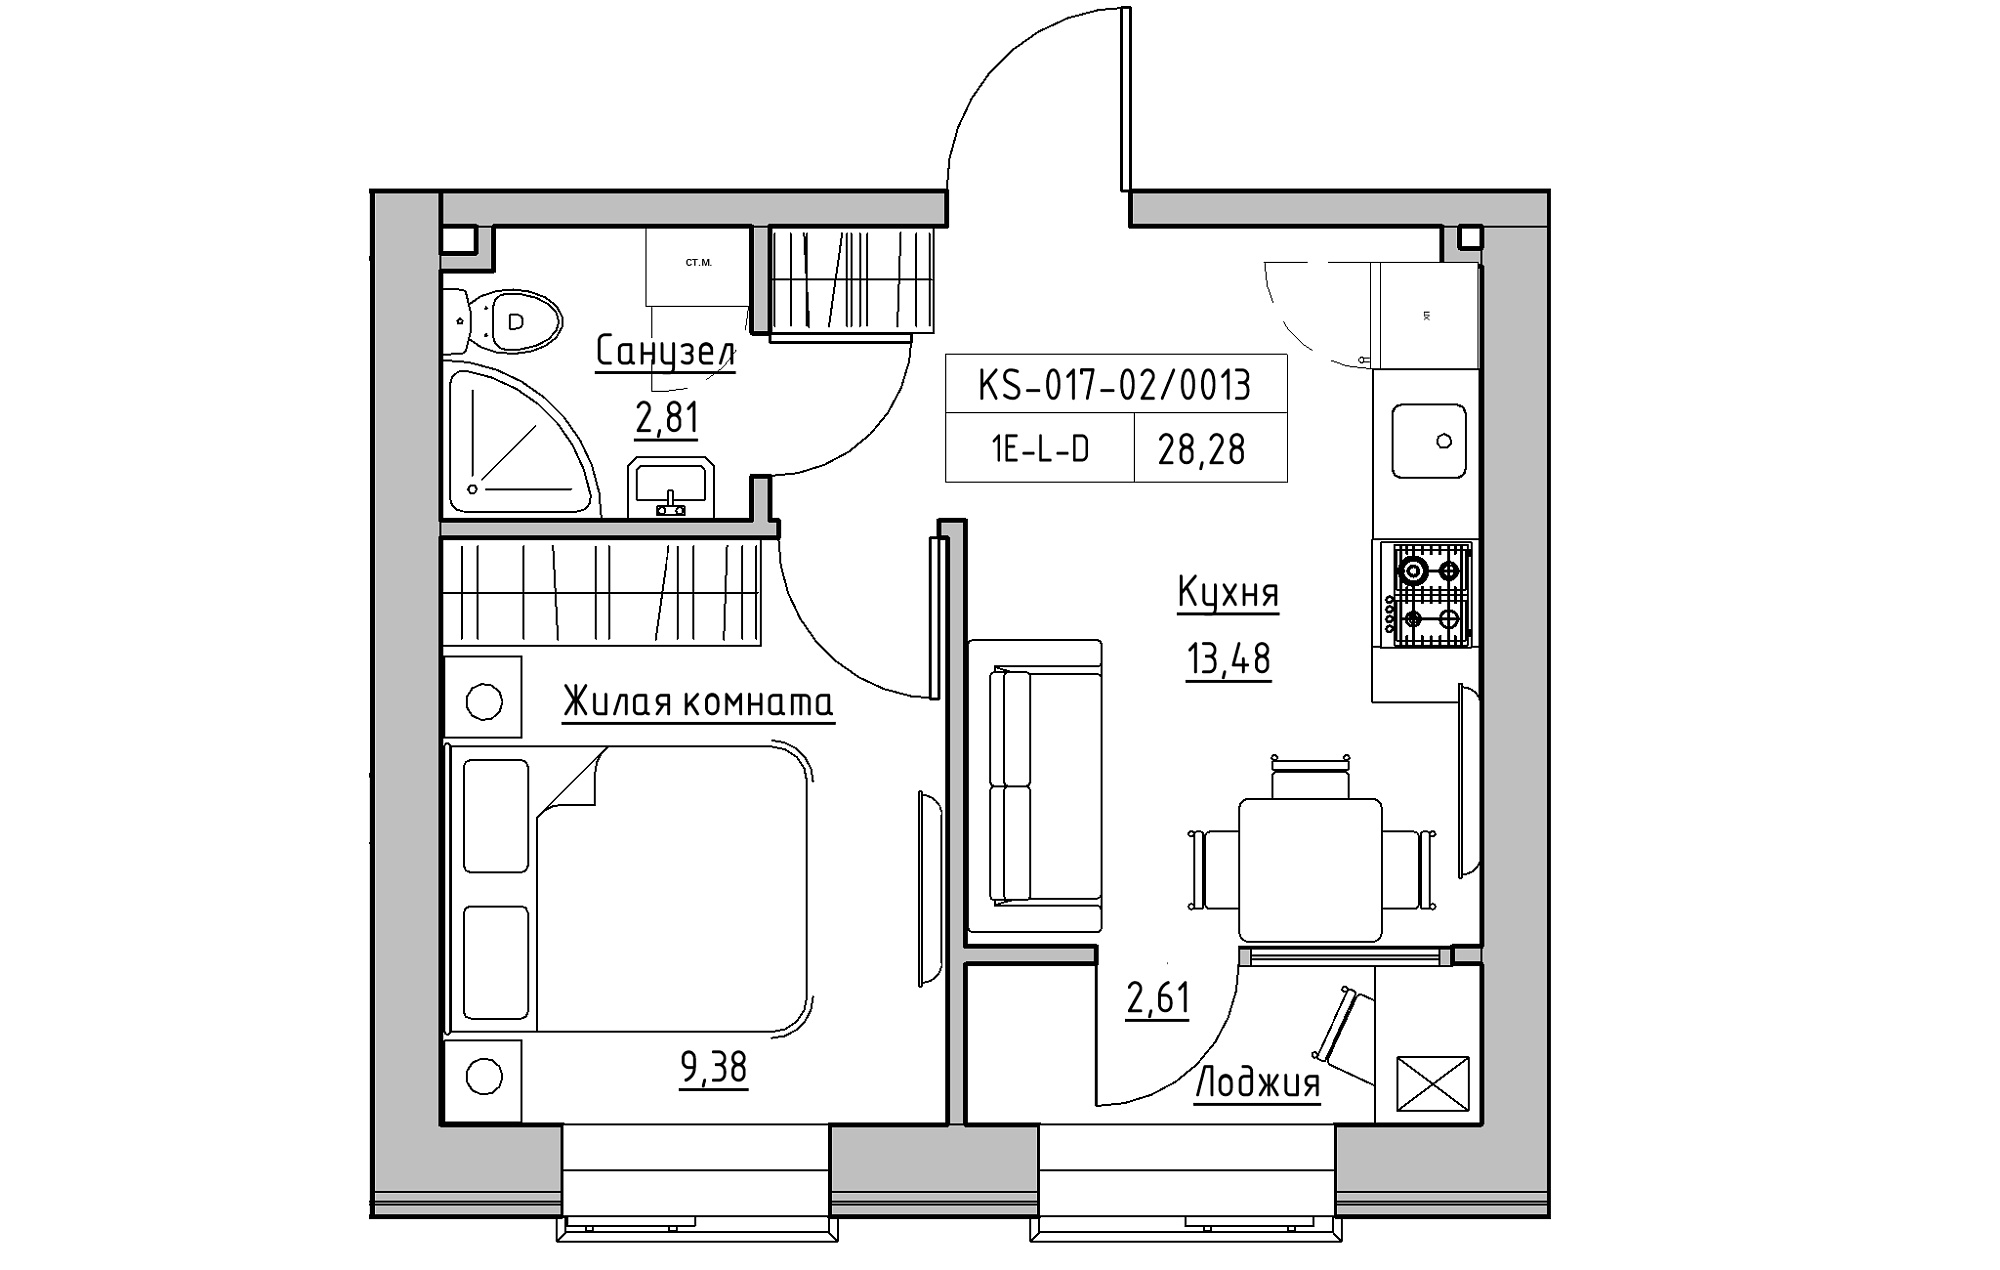 Planning 1-rm flats area 28.28m2, KS-017-02/0013.